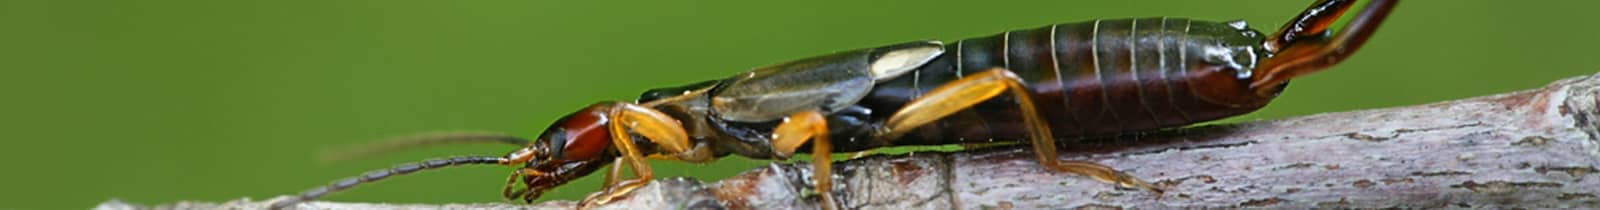 Earwig exterminator pest control Nashville, TN